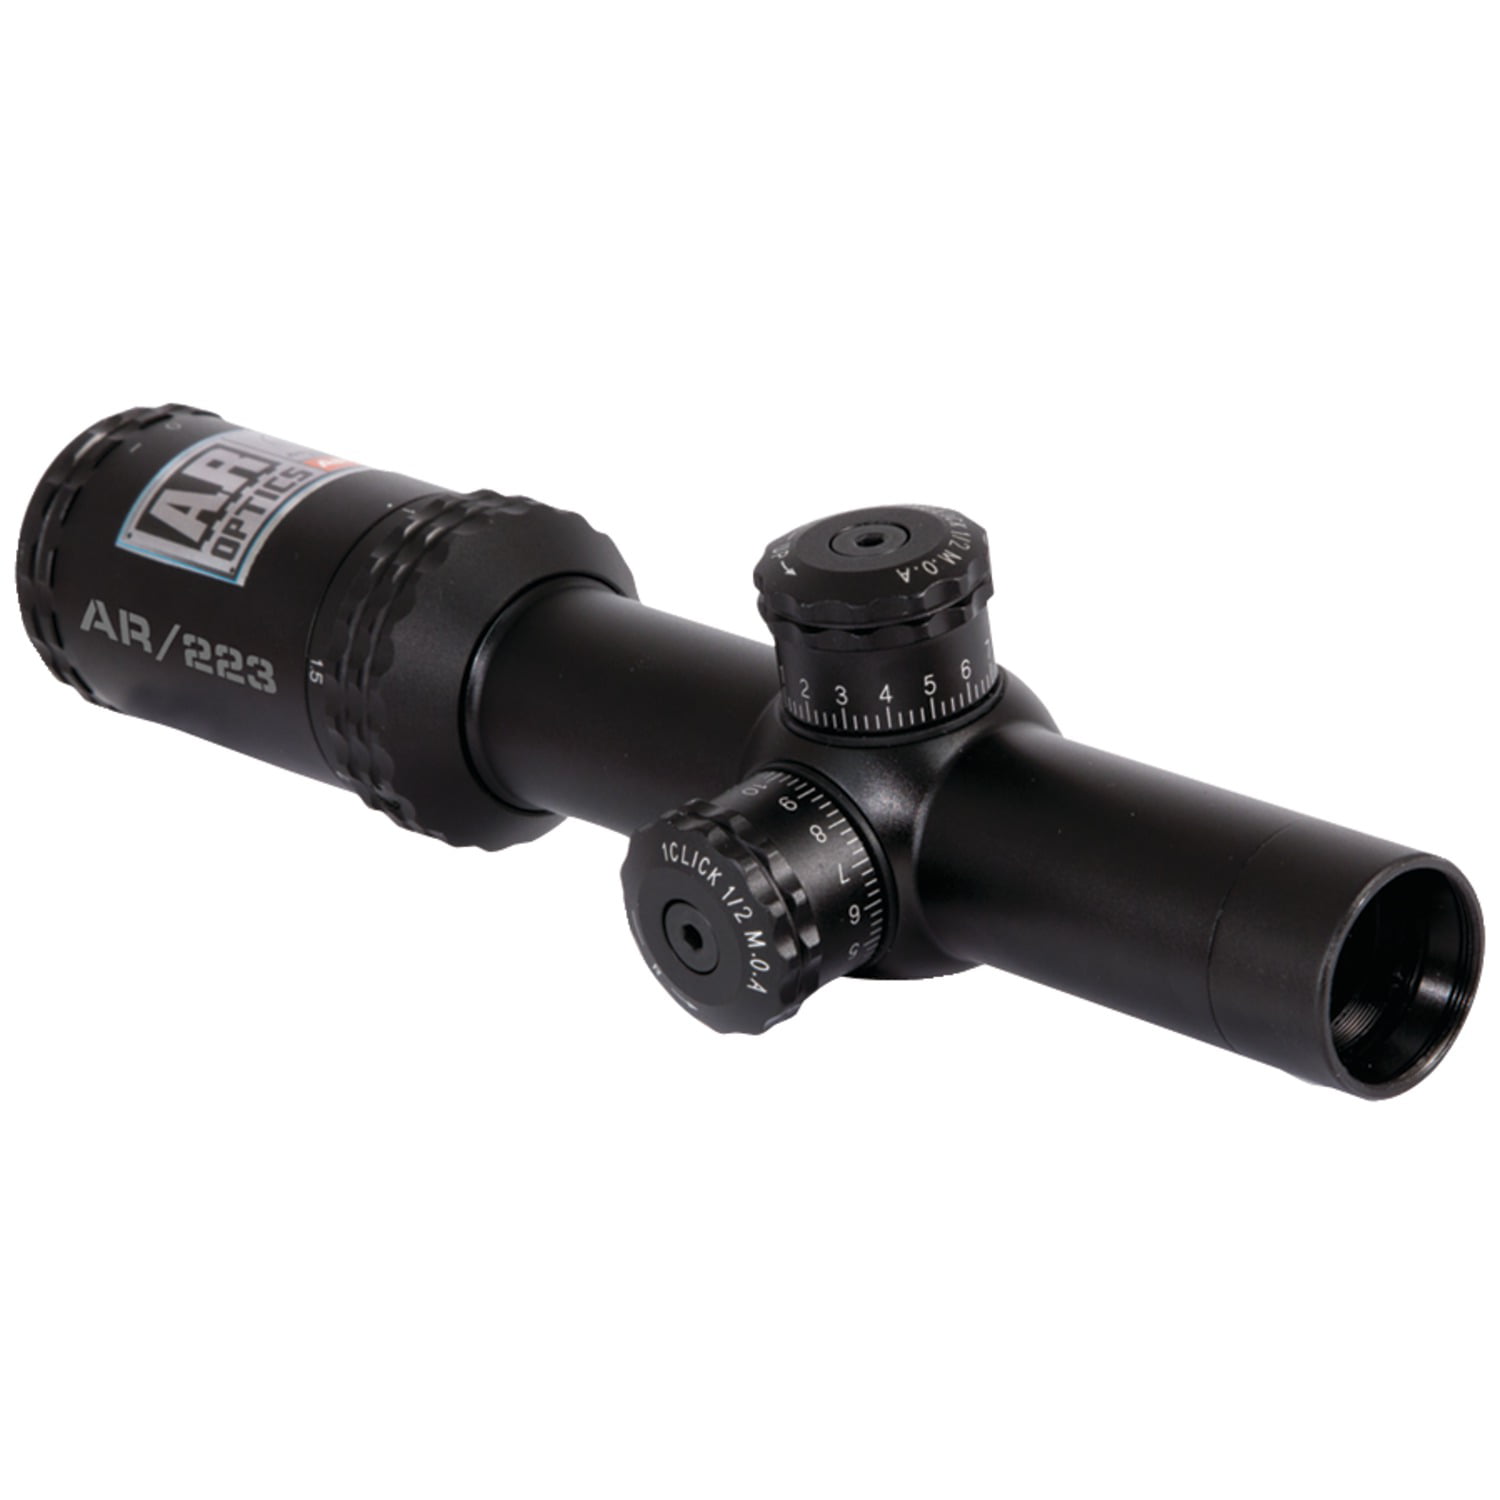 Bushnell AR91424 AR Optics 1-4 X 24mm Riflescope & Simmons 801600 